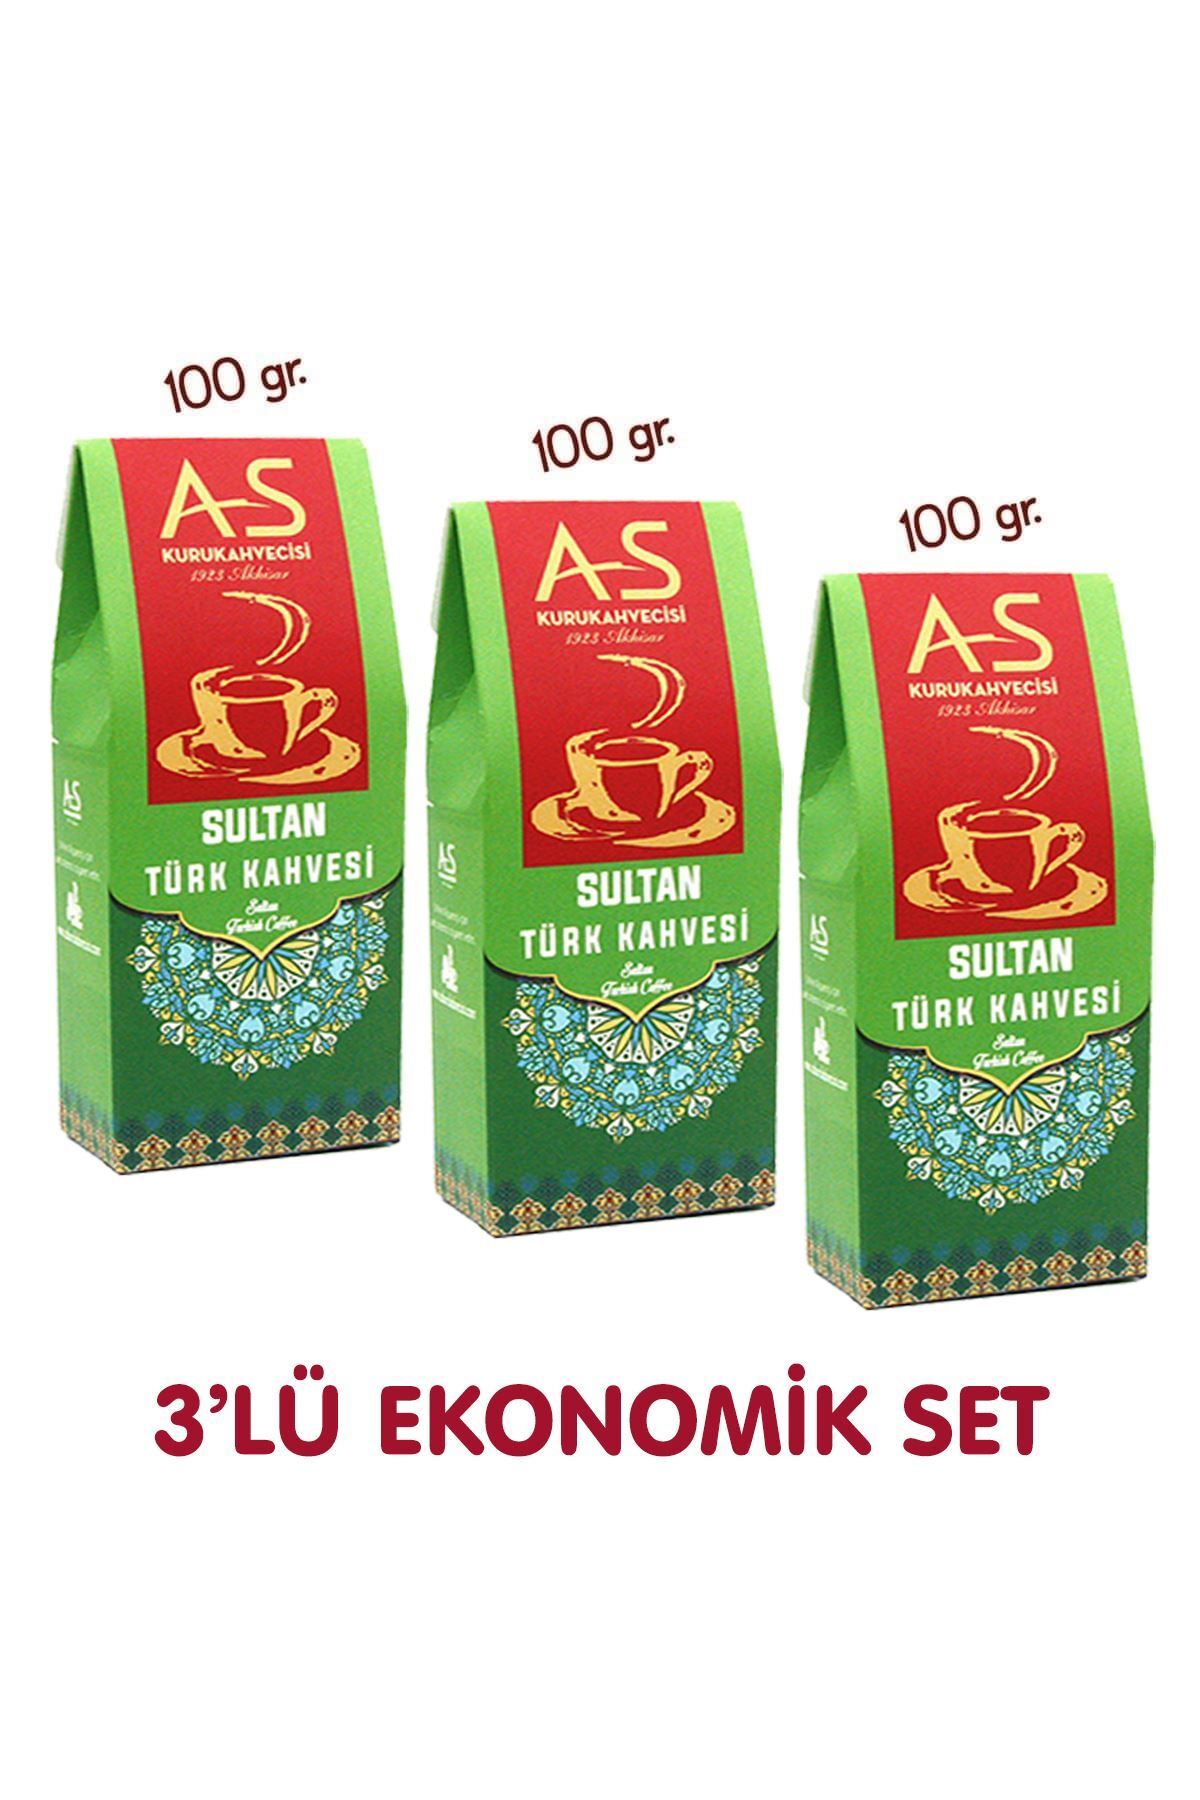 AS Kurukahvecisi 3'lü Sultan Türk Kahvesi Ekonomik Set